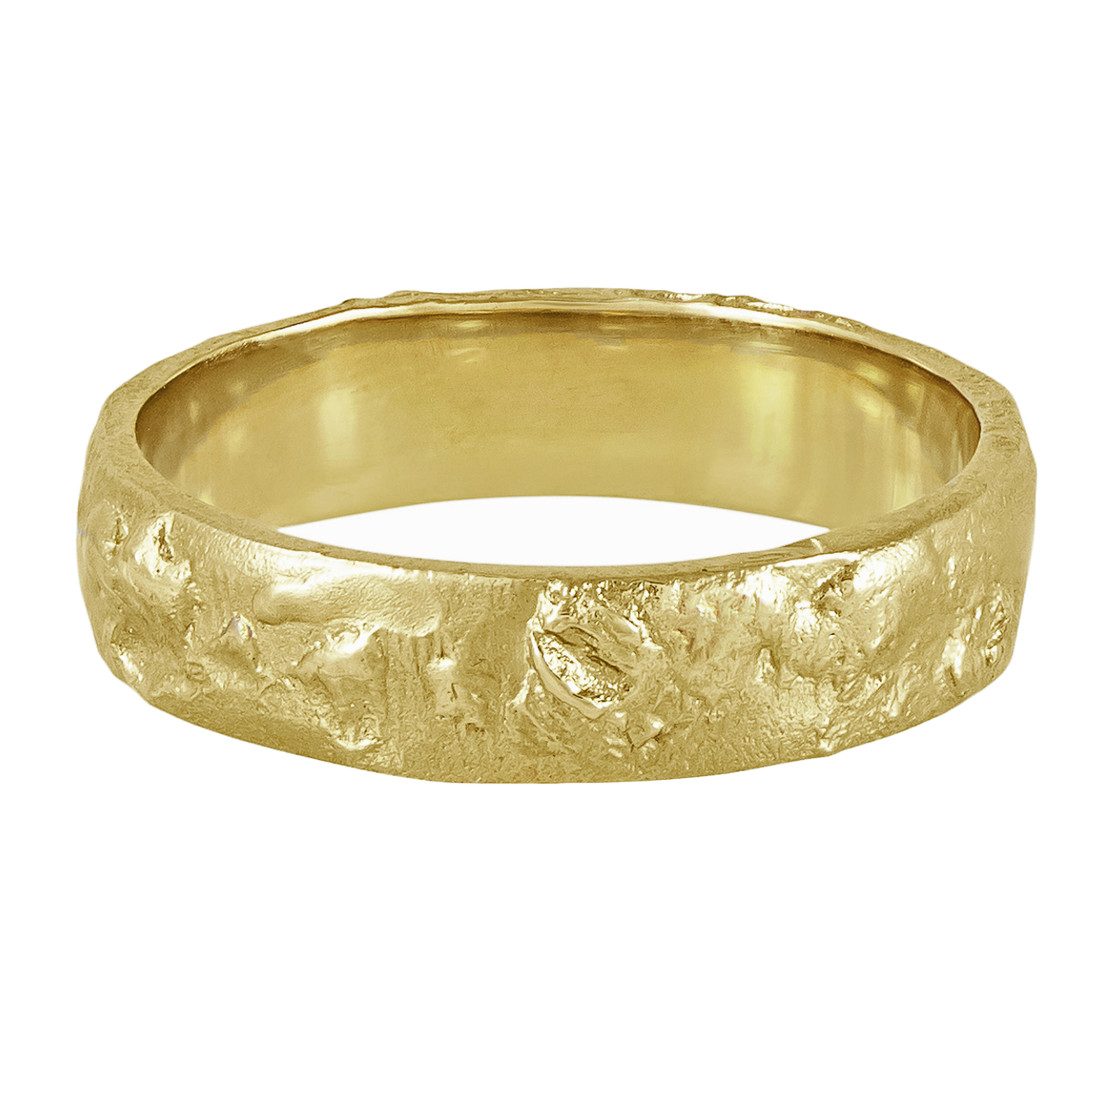 tomfoolery, Ellis Mhairi Cameron,'XIX' 14ct Yellow Gold 5mm Wedding Ring